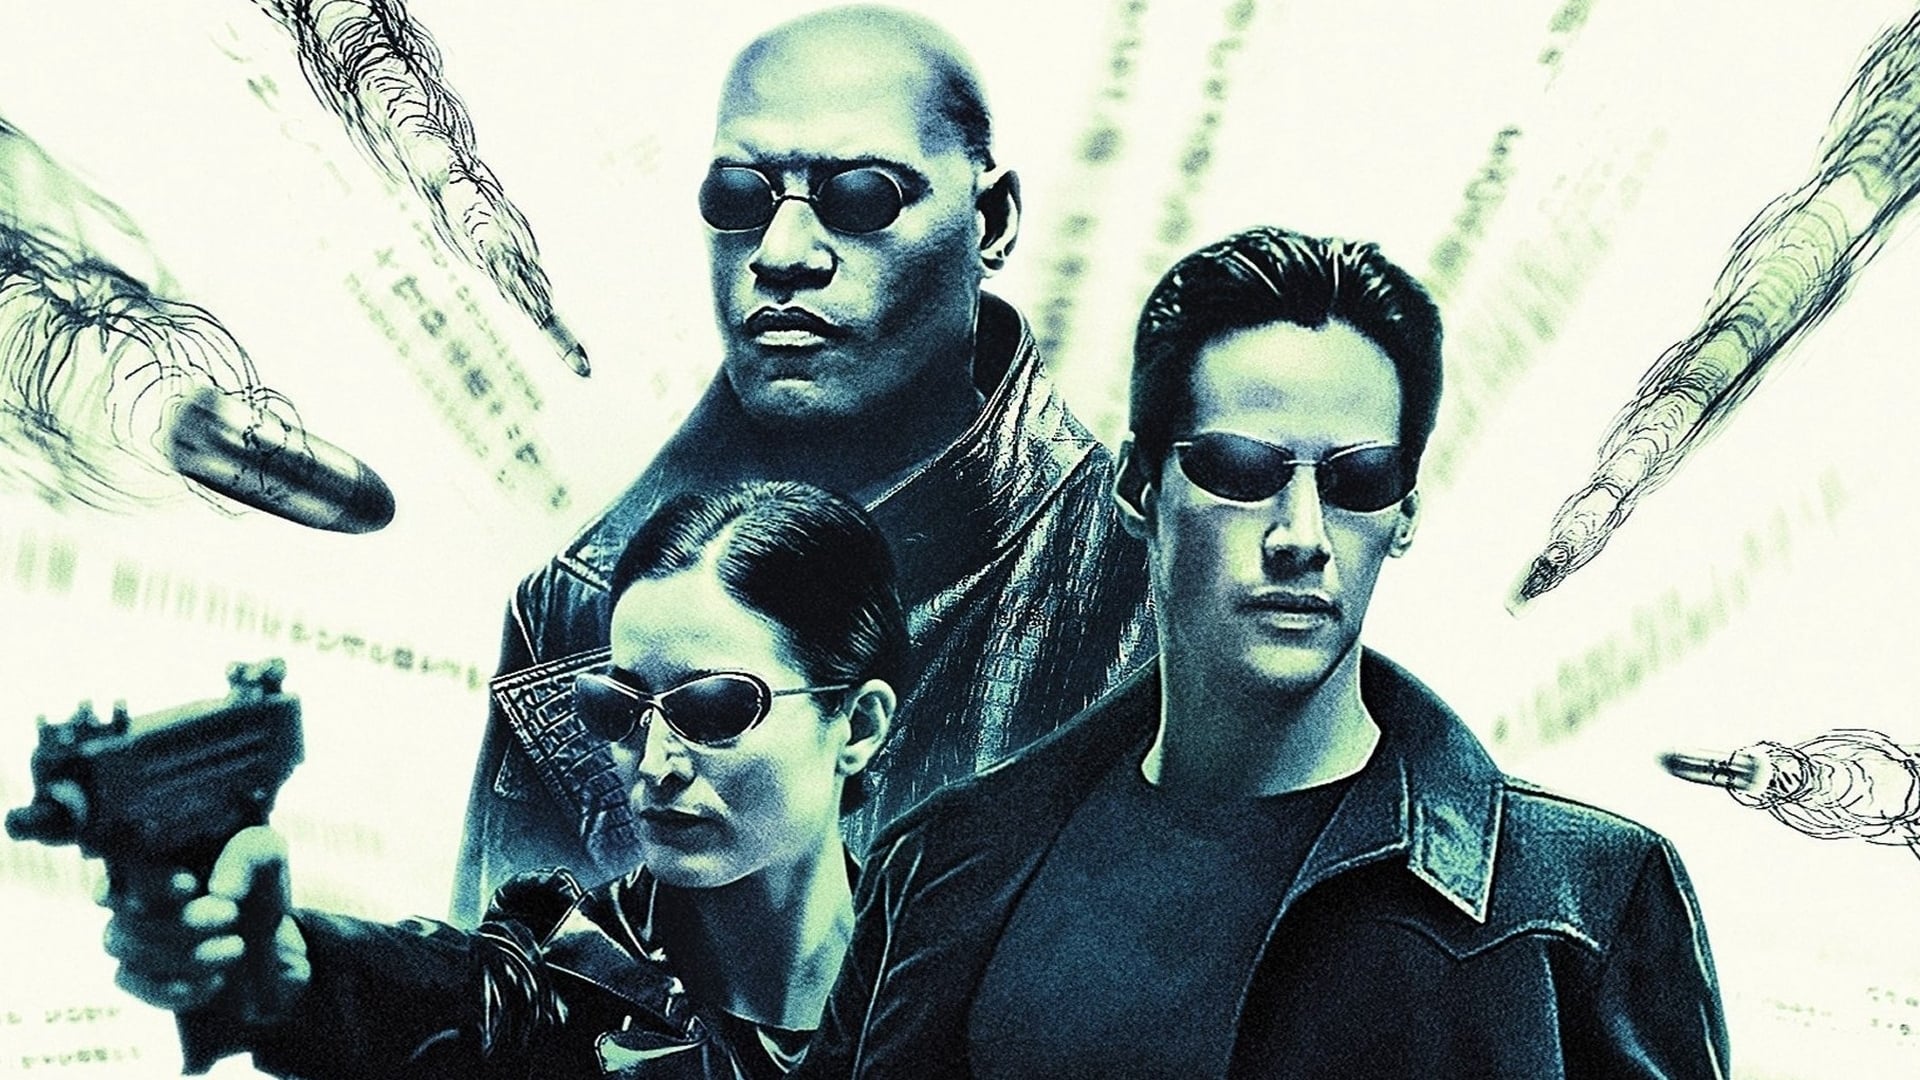 stream the matrix full movie